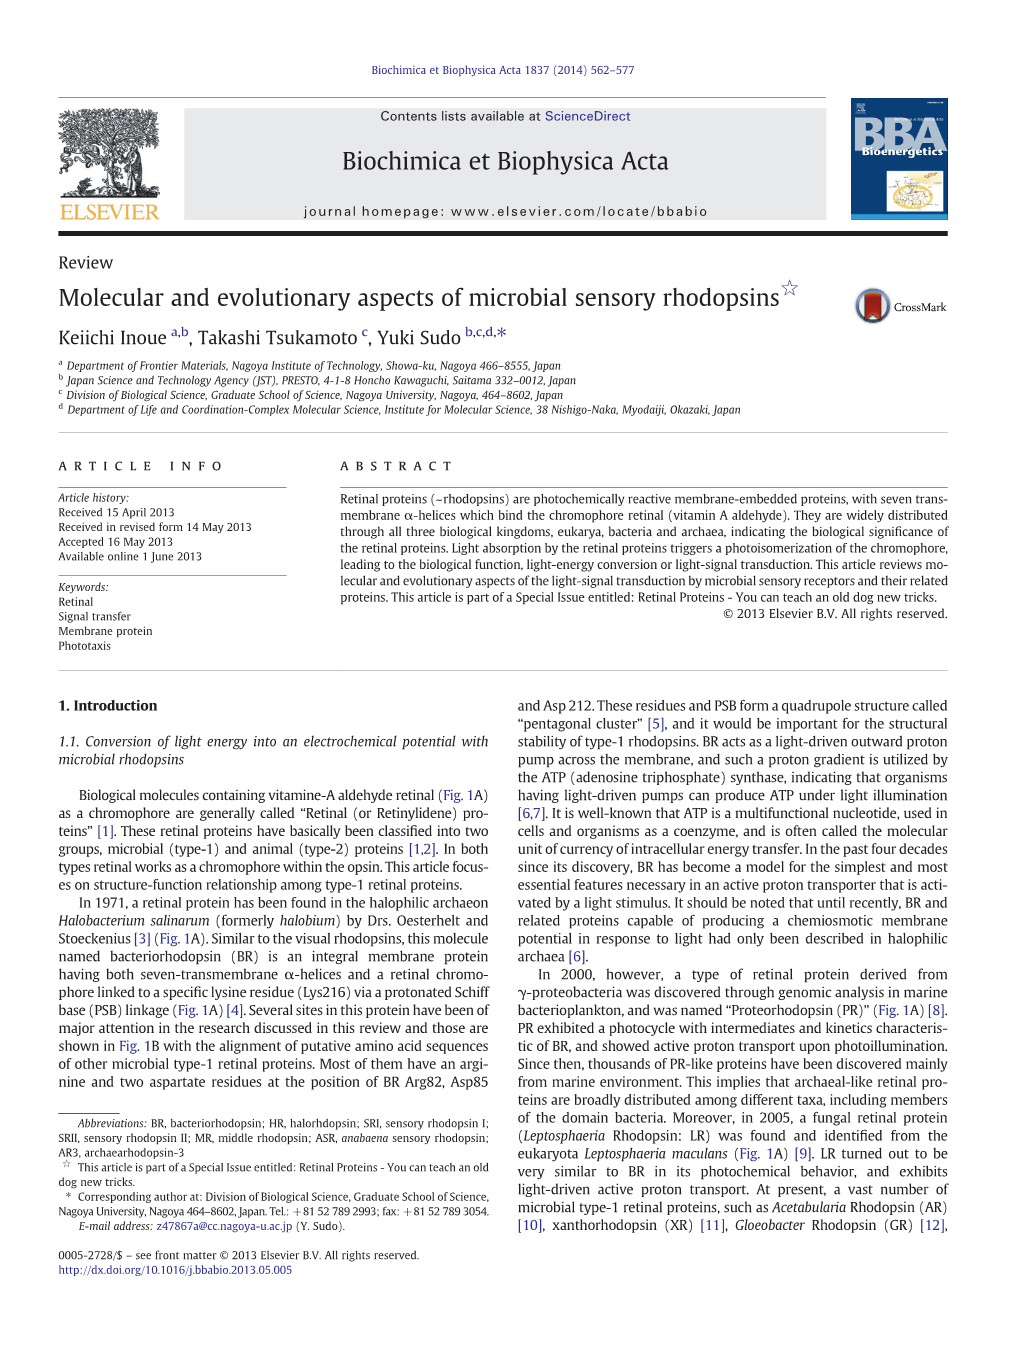 Molecular and Evolutionary Aspects of Microbial Sensory Rhodopsins☆